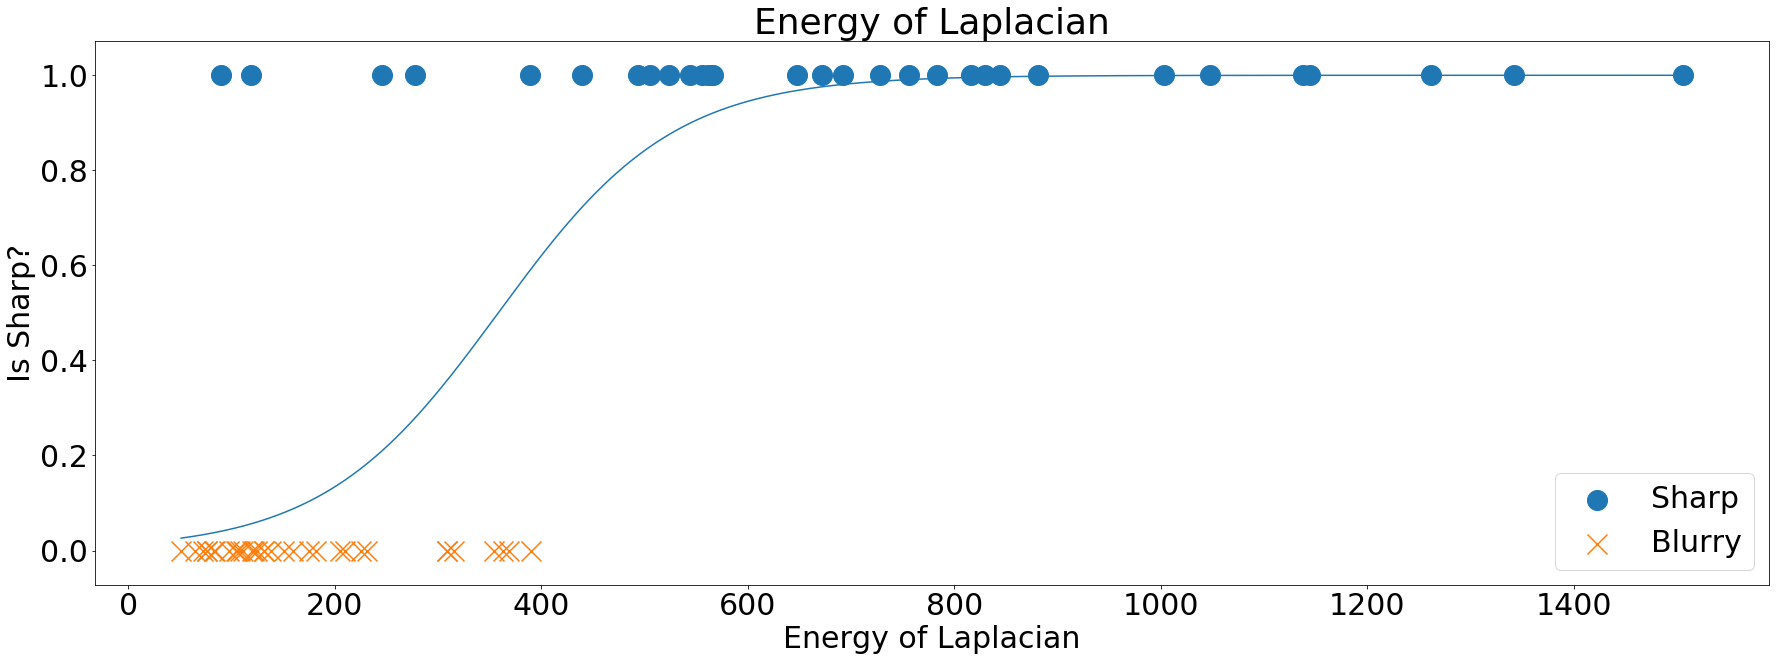 Energy of the Laplacian plot